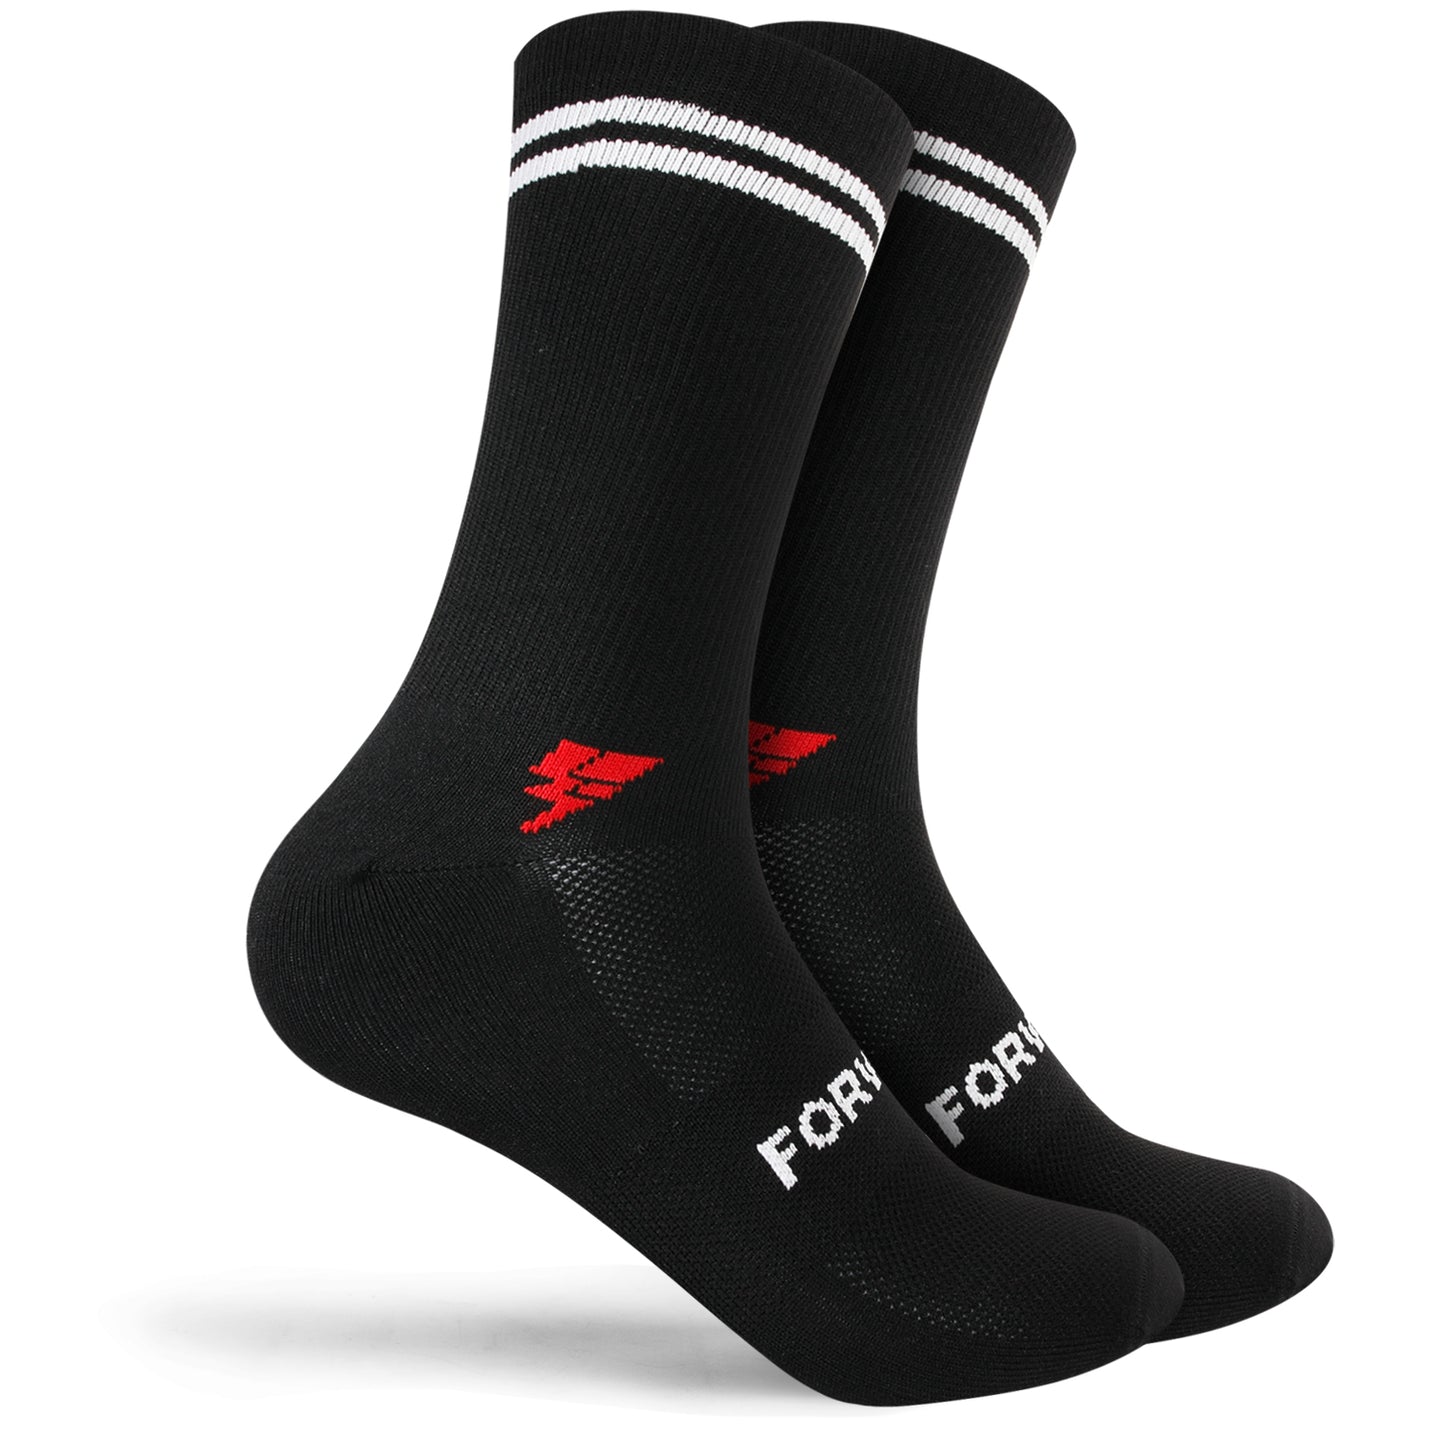 Forward Line Sport Cycling Socks - Zol Cycling